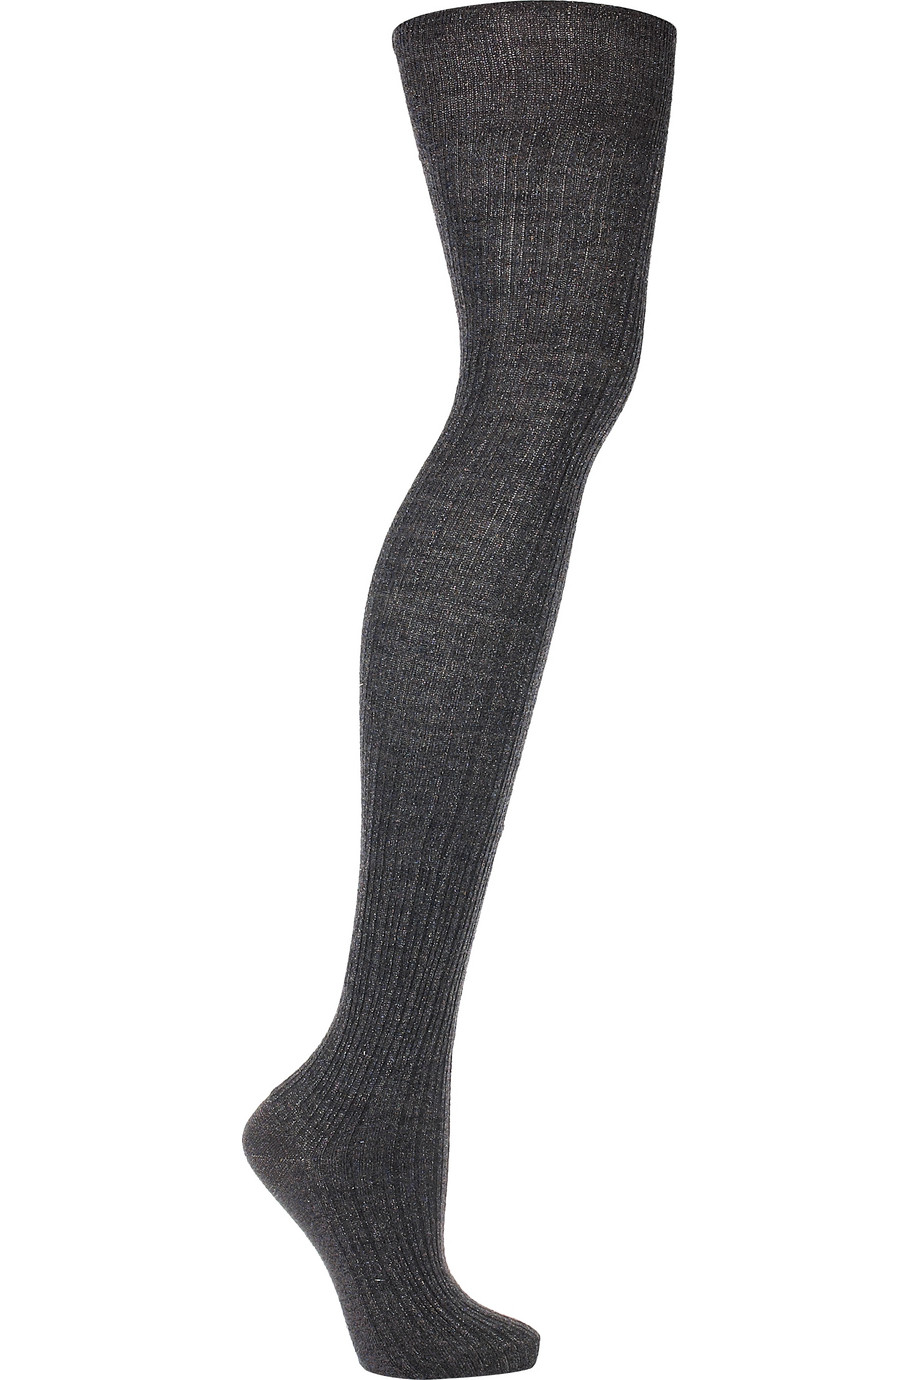 Lyst - Miu miu Metallic Ribbed Wool-blend Socks in Gray